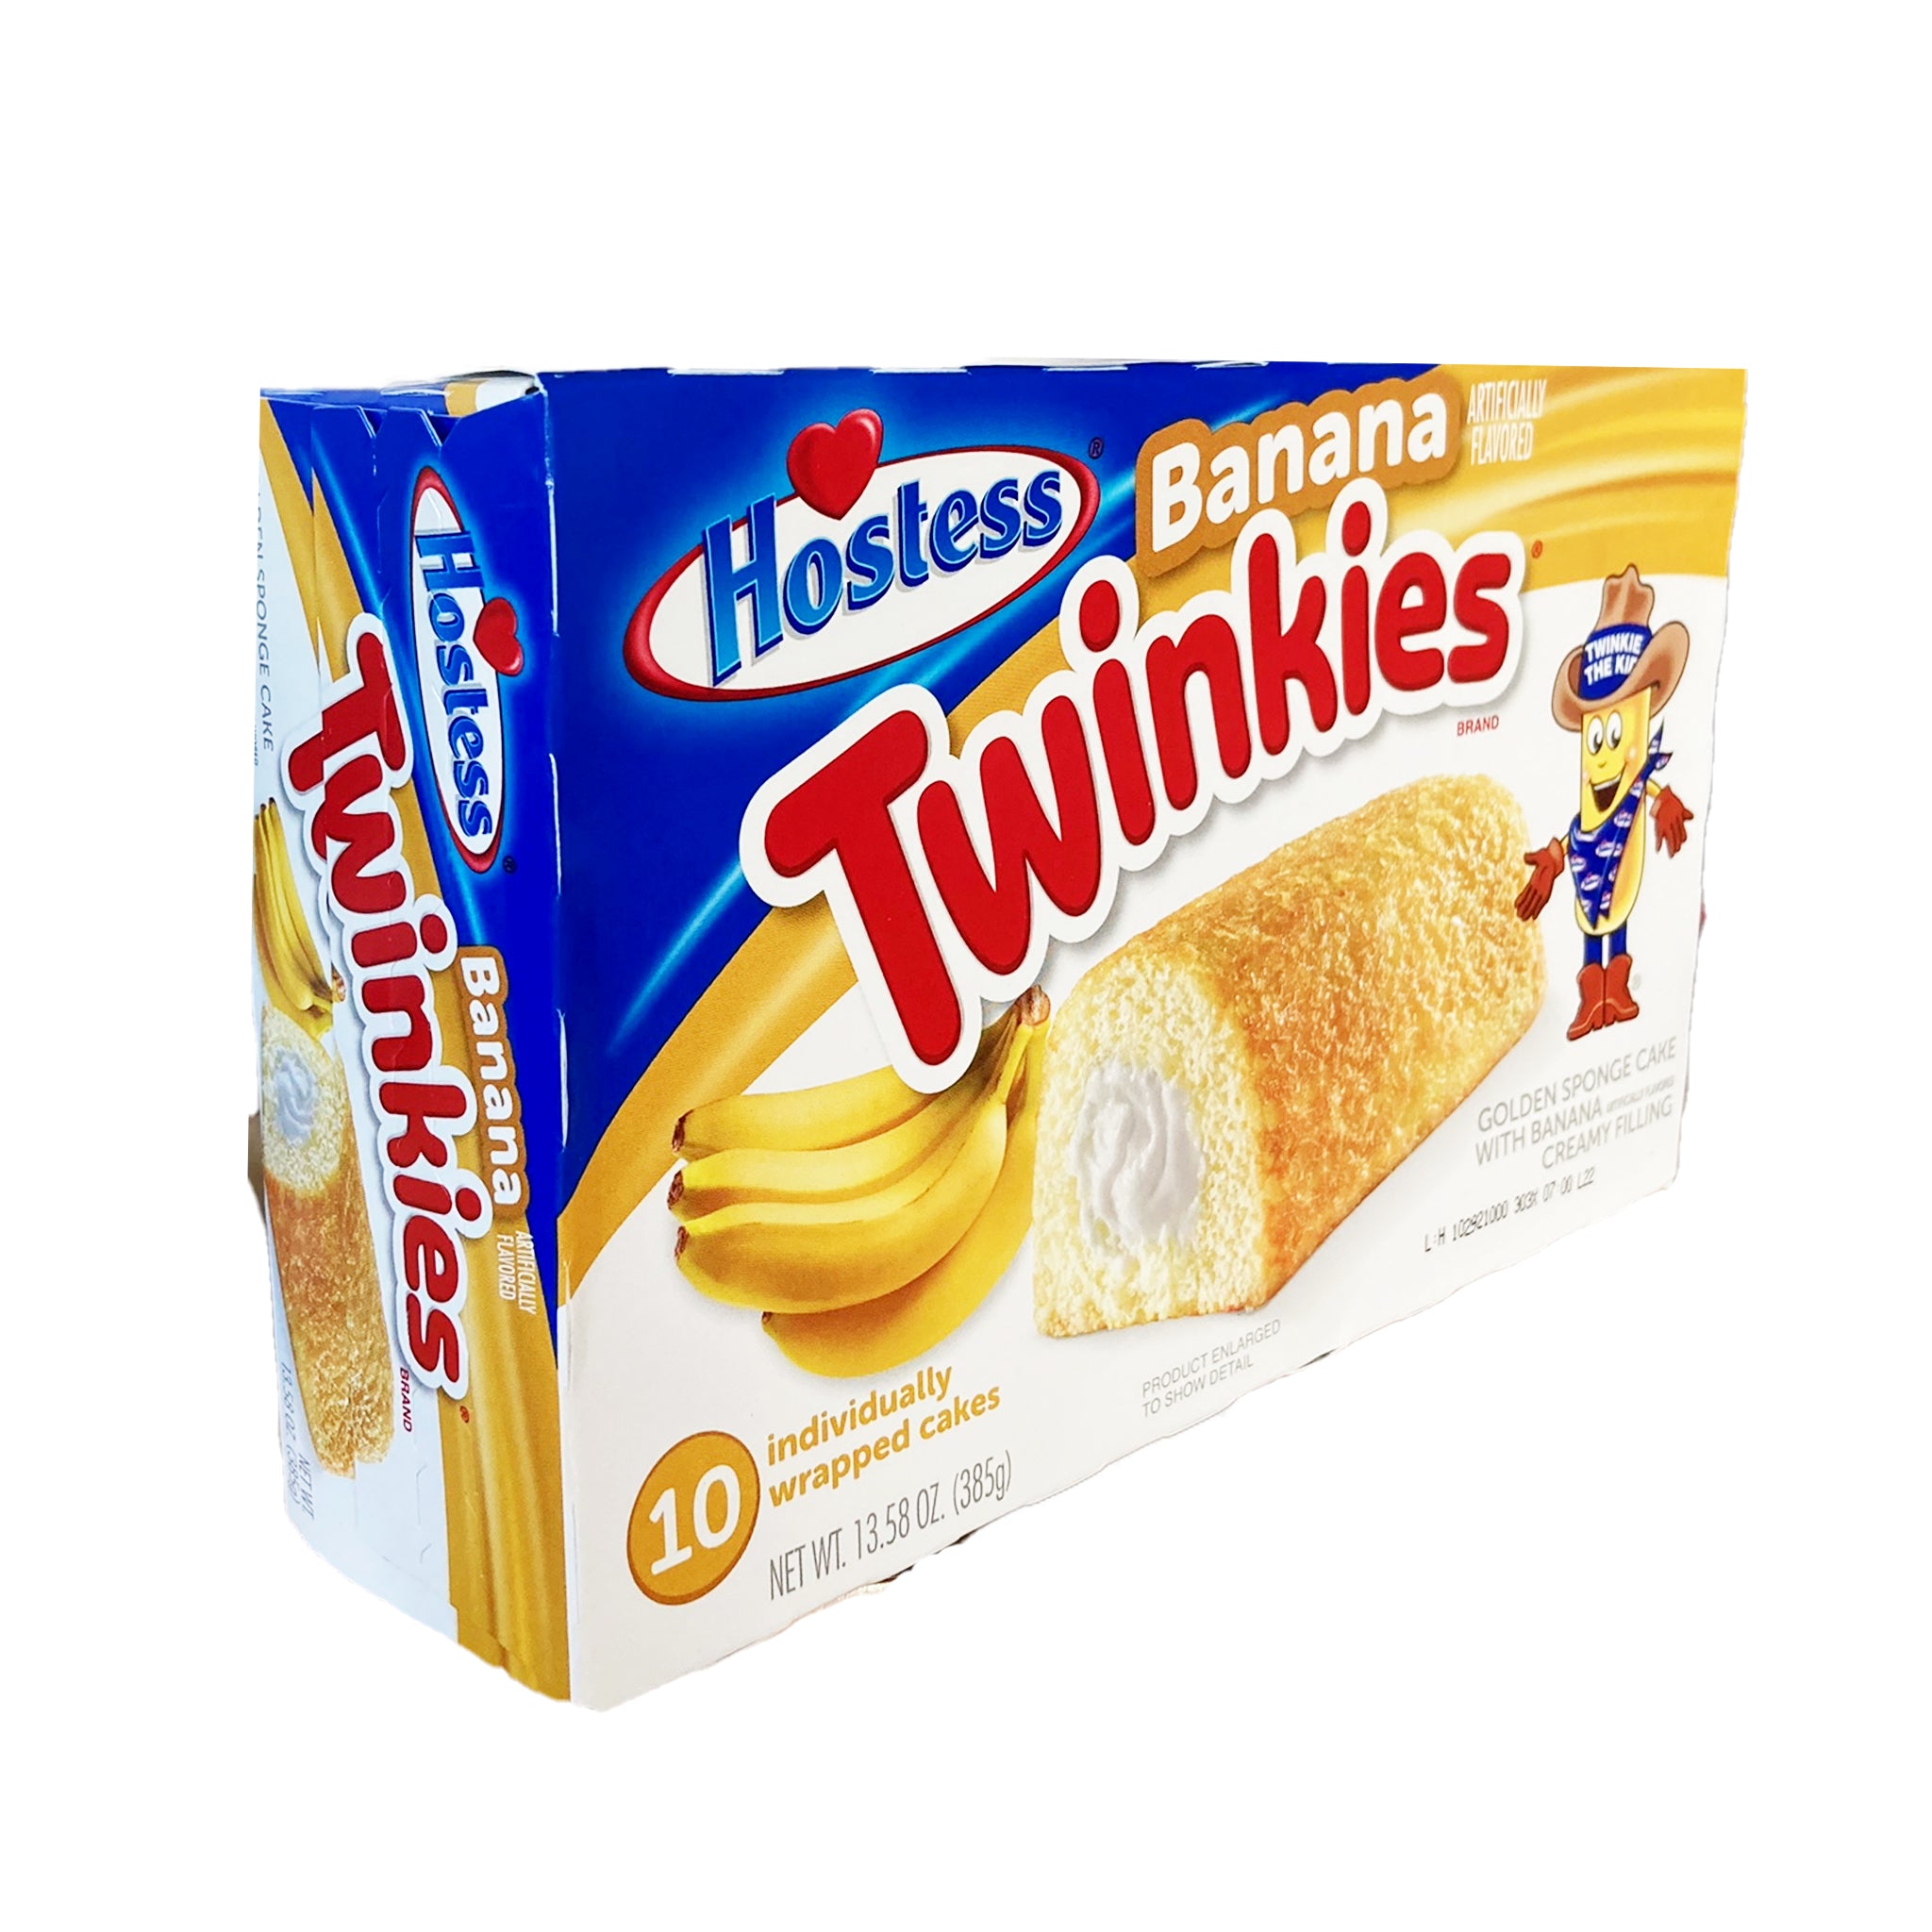 Twinkies banana עוגות טווינקיס בננה - טעימים